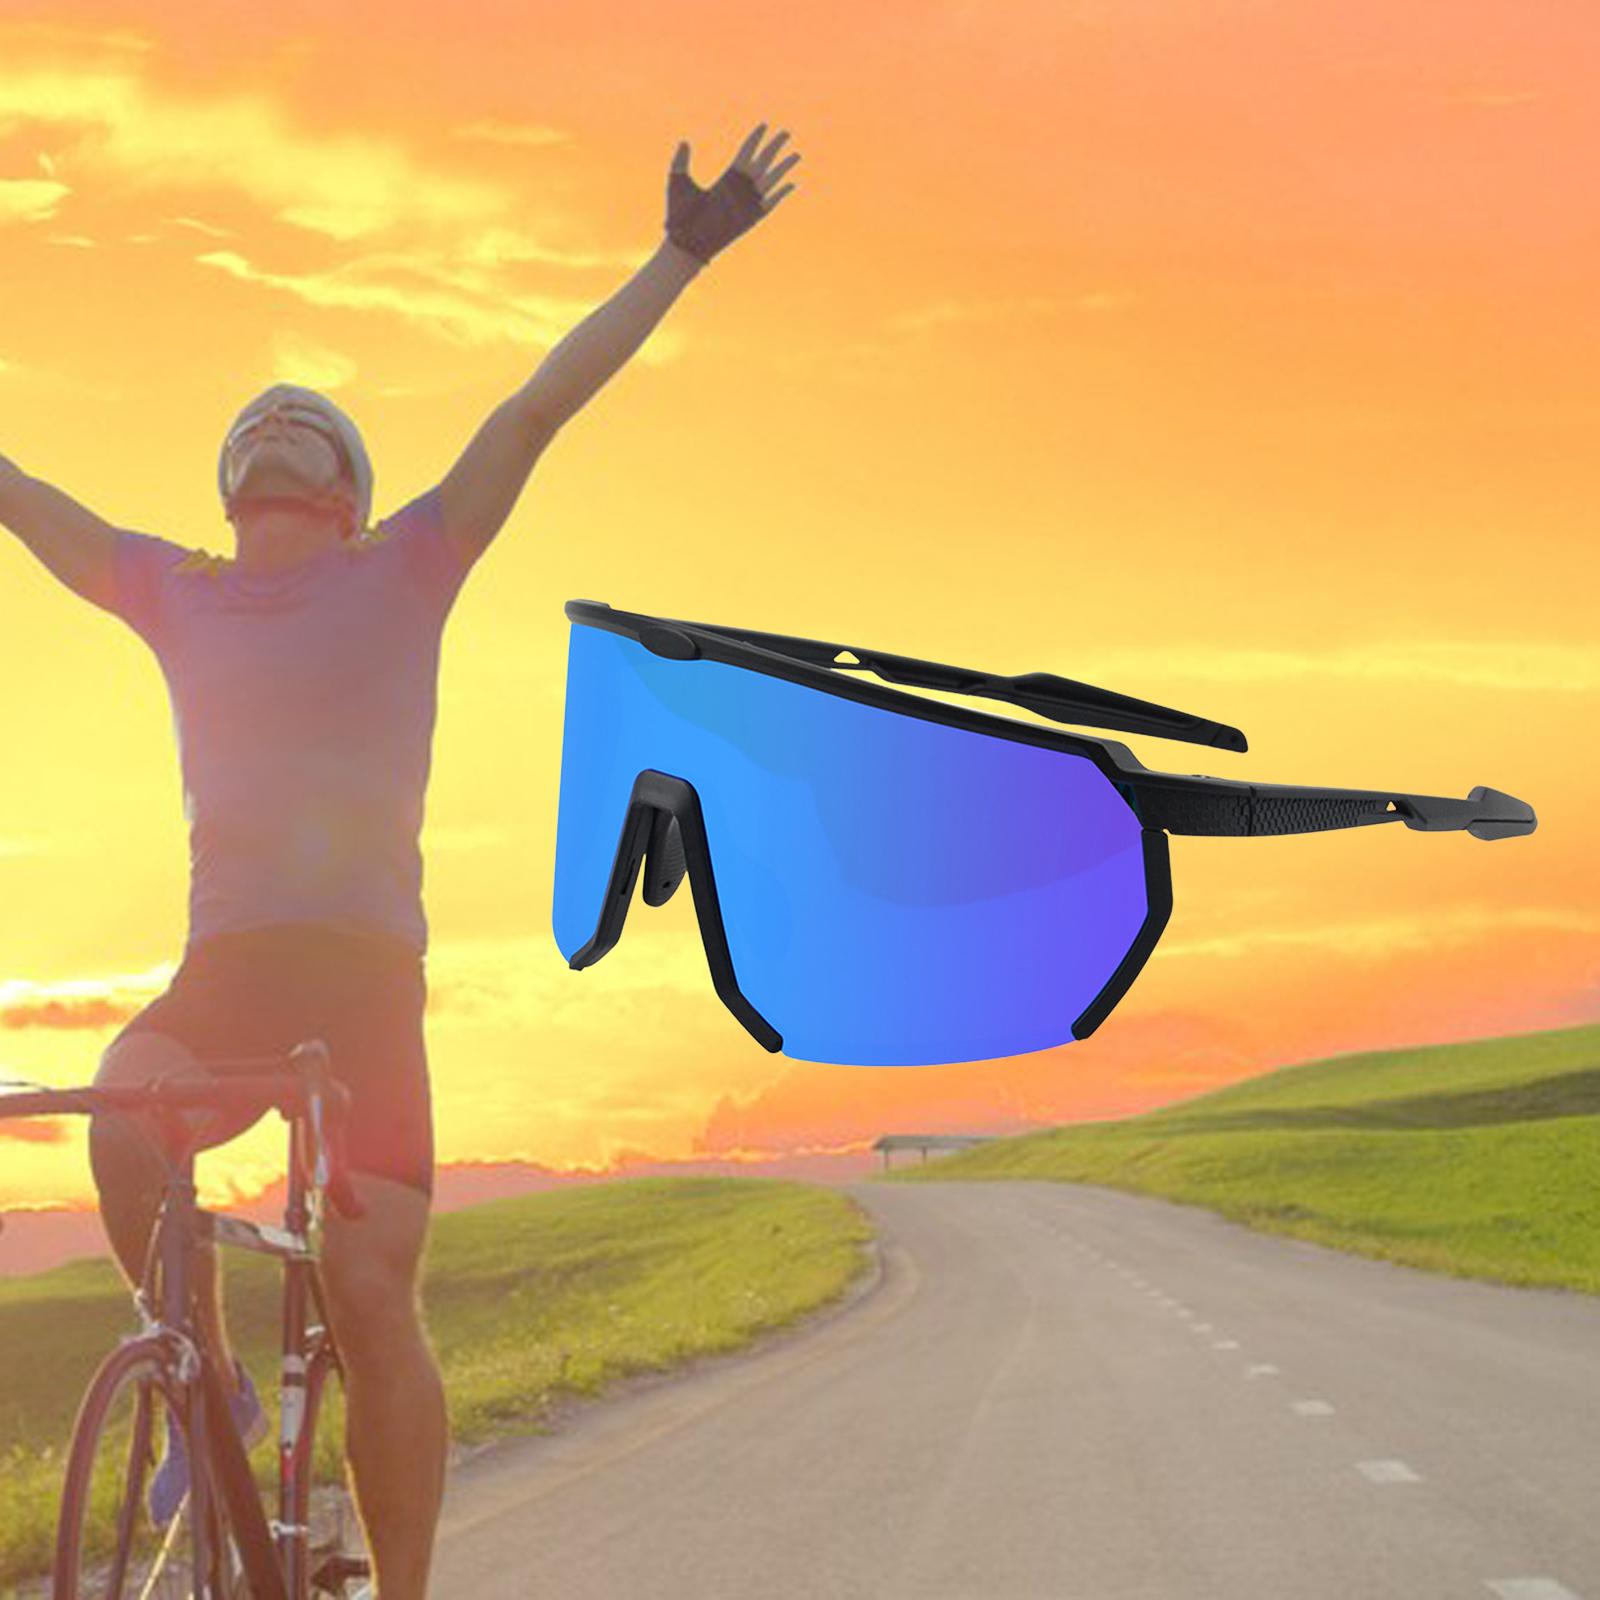 Full Screen Polarized Sports Sunglasses Beach Riding Golf Cycling Glasses Blue Lens